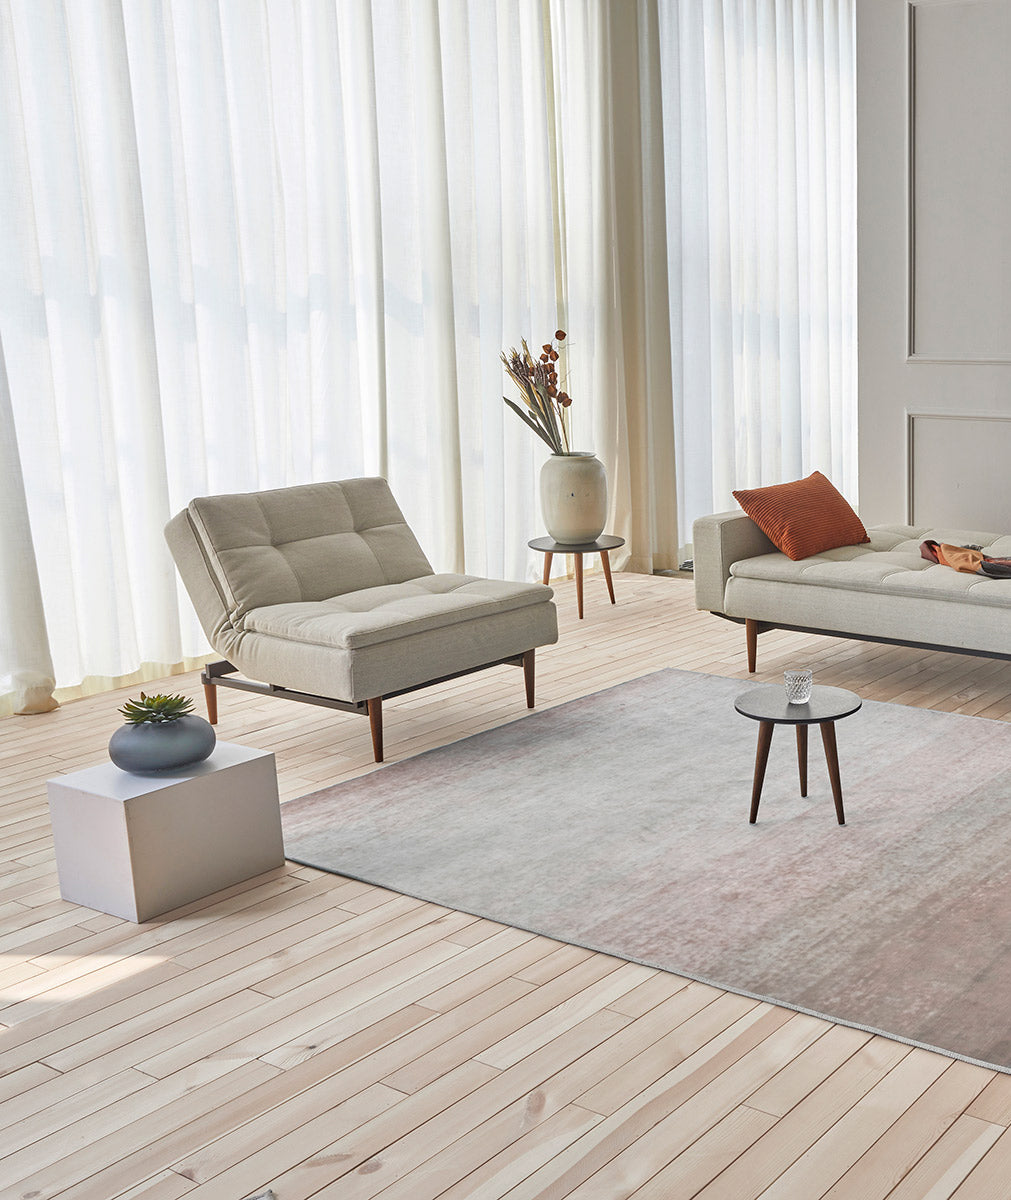 Dublexo Deluxe Chair - More Colors Innovation Living - BEAM // Design Store